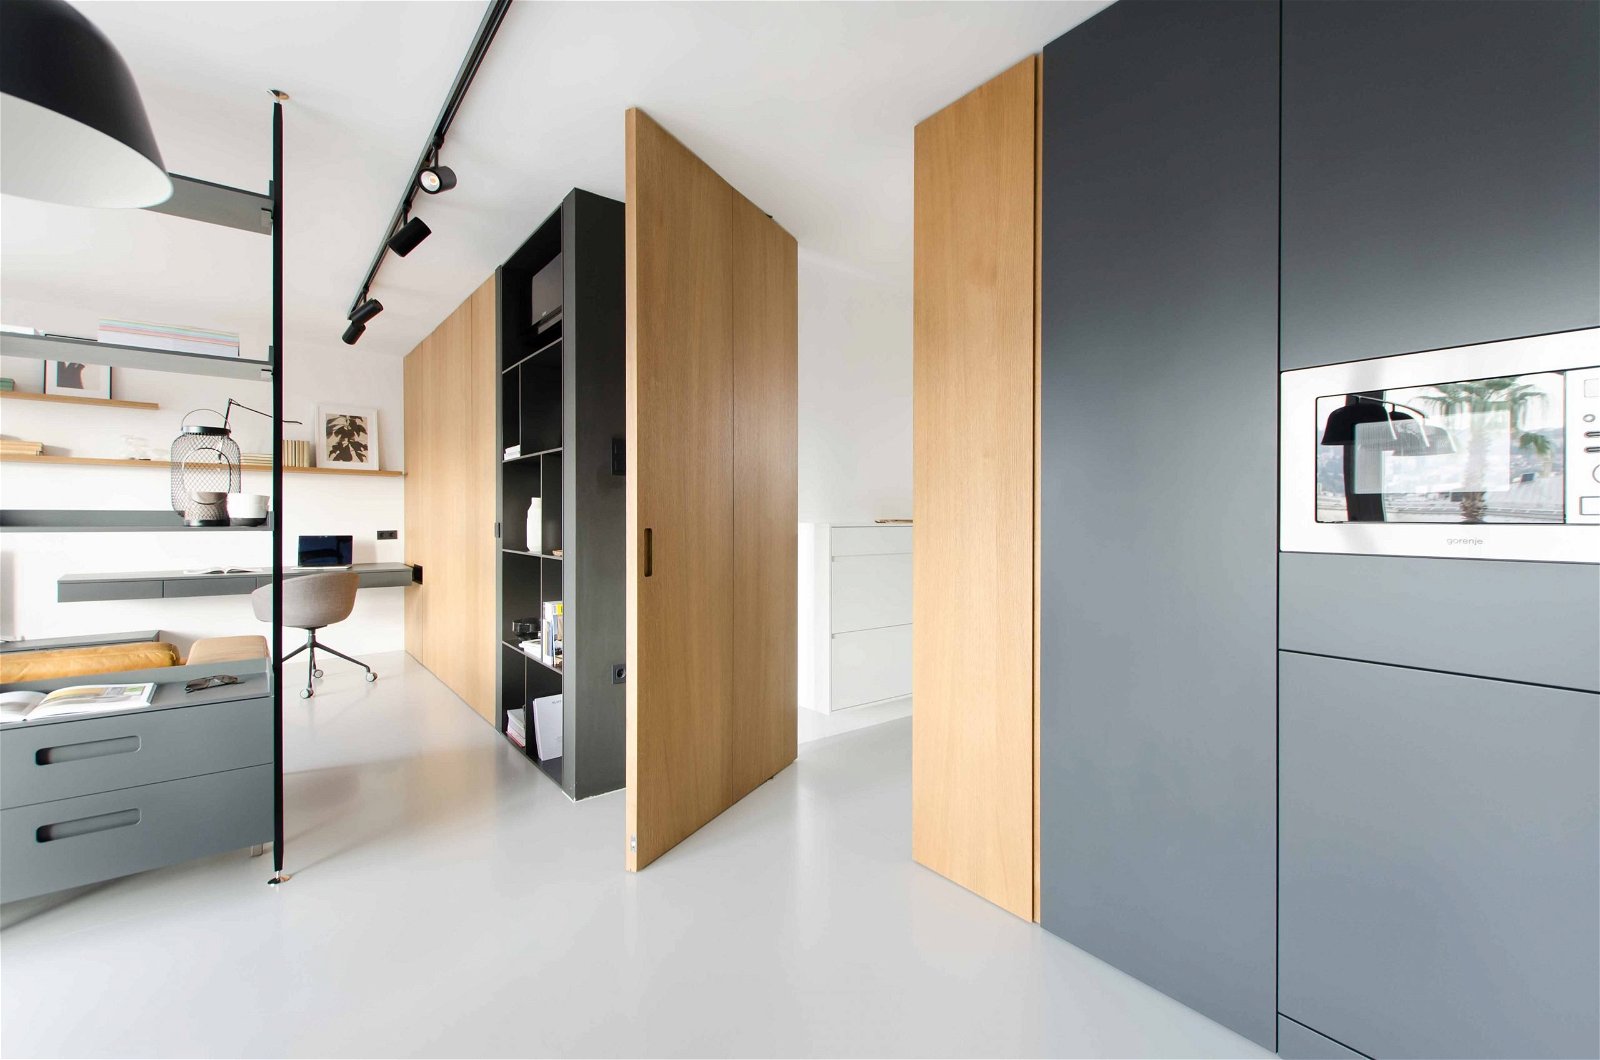 Interior-design-by-marasovic-arhitekti-with-pivot-door-with-FritsJurgens-pivot-hinge-system-scaled.jpg